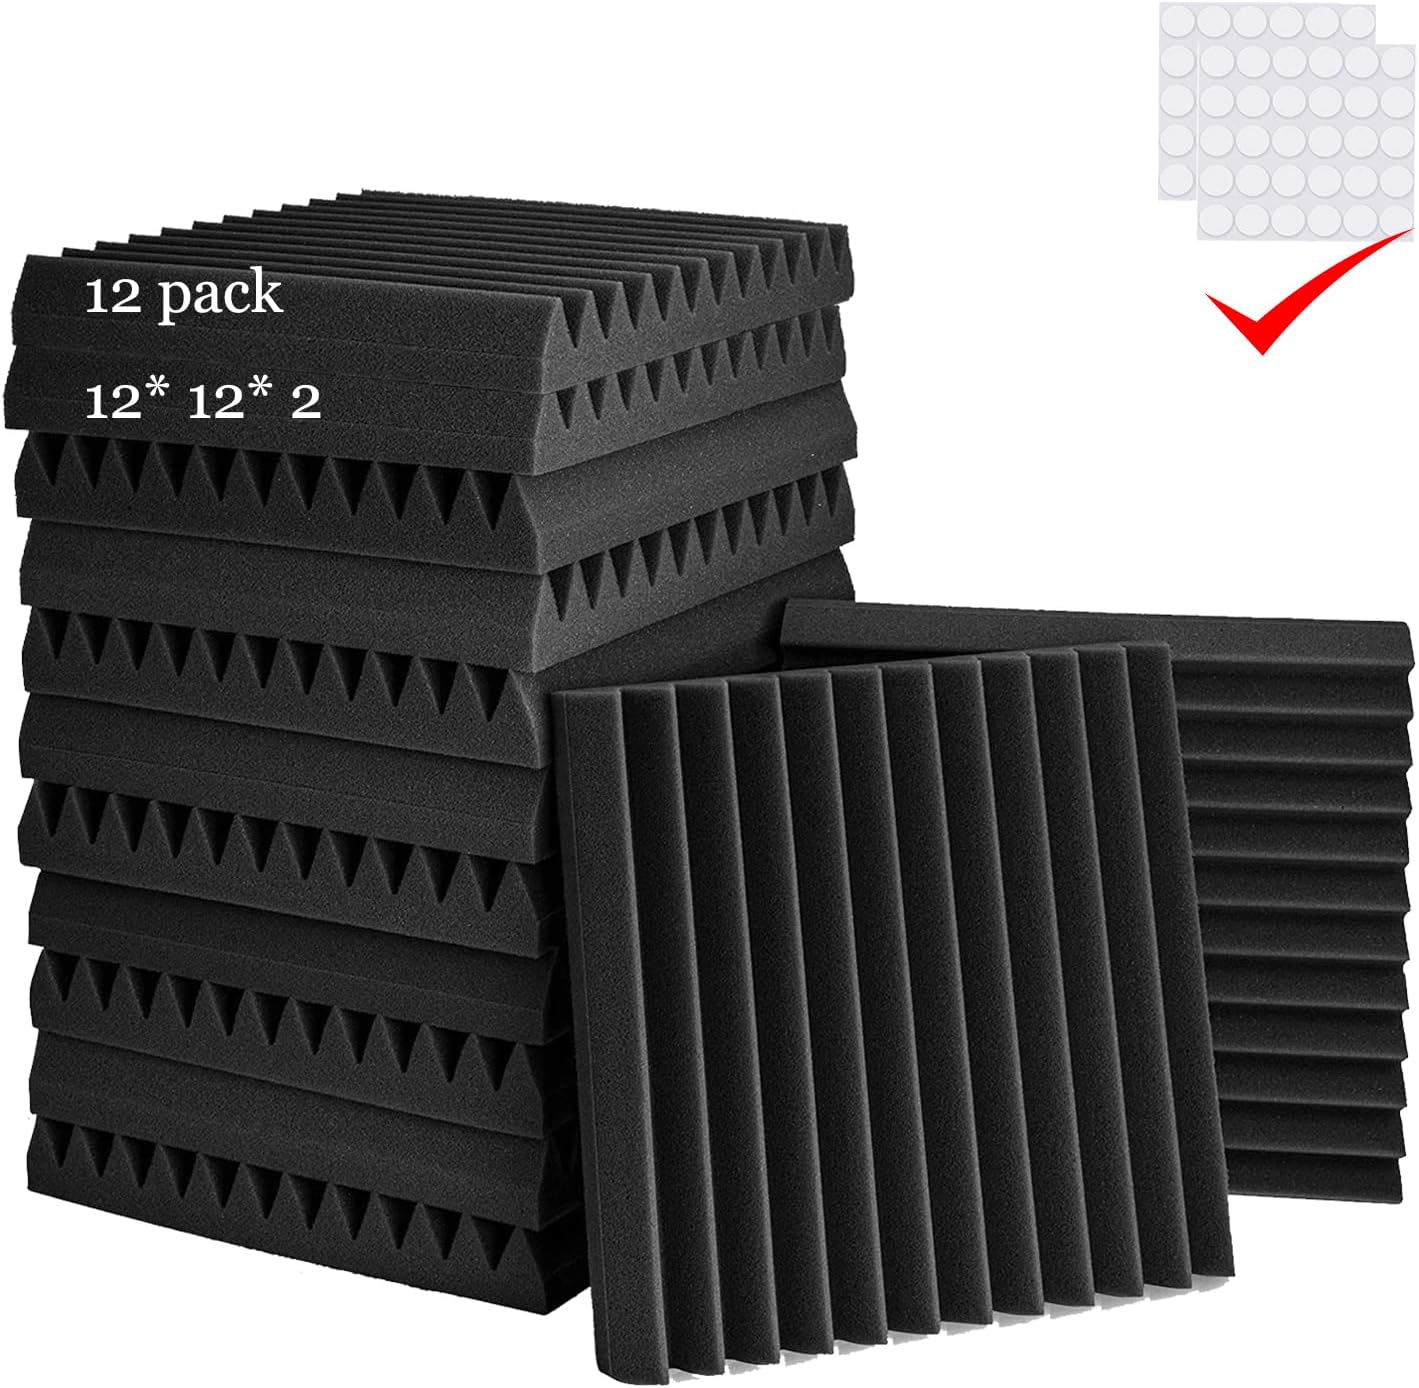 Acoustic Foam Panels - Pack of 12 Flame Retardant [...]